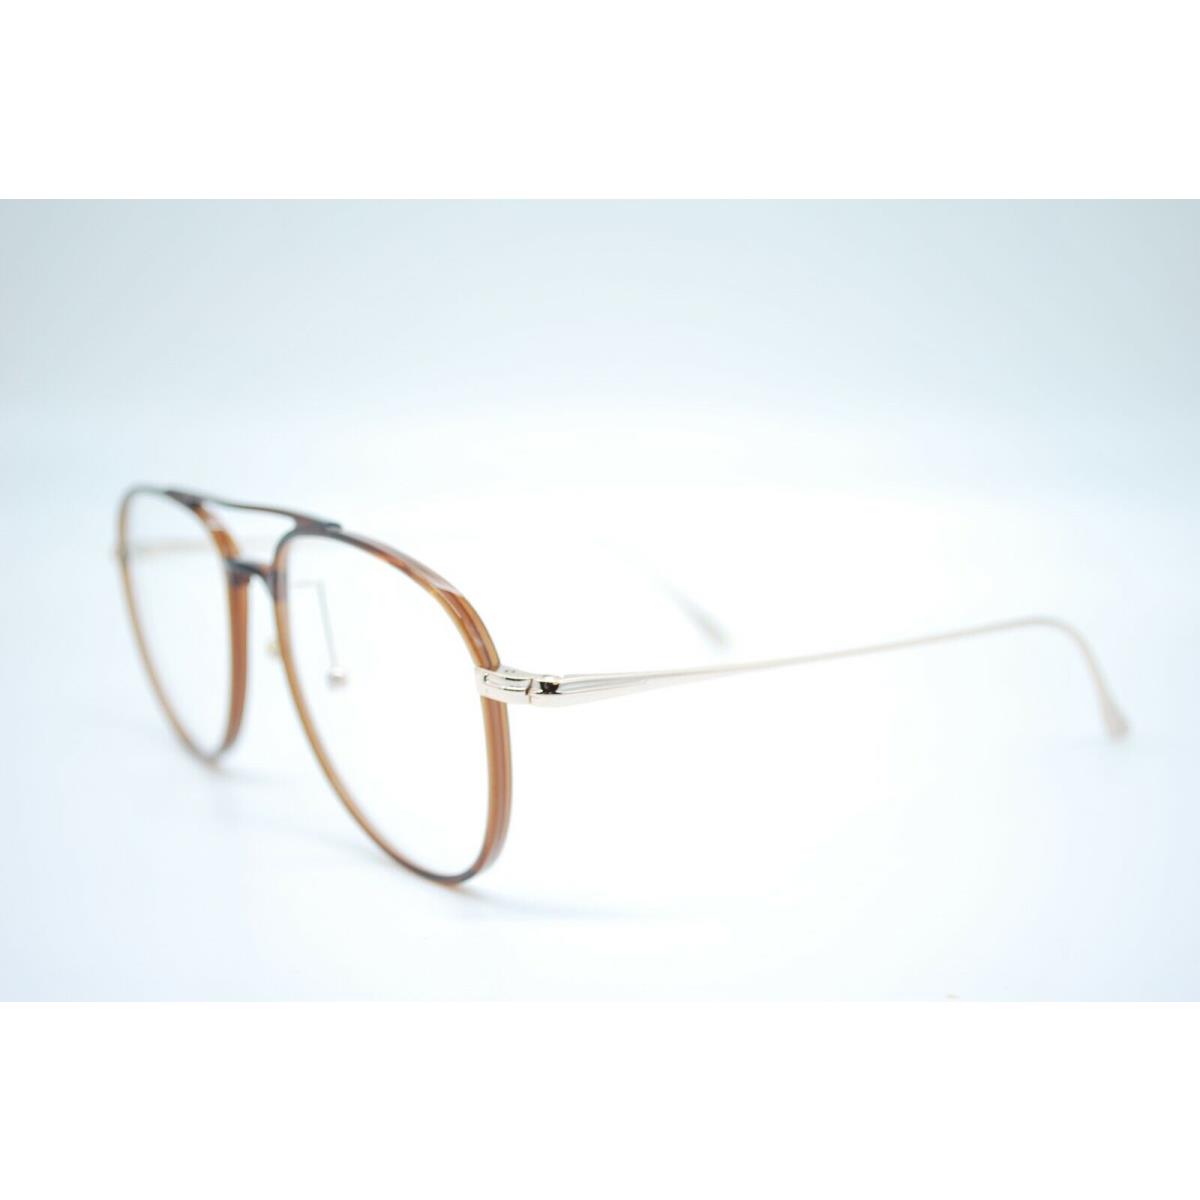 Tom Ford eyeglasses  - BROWN ROSE GOLD Frame 0